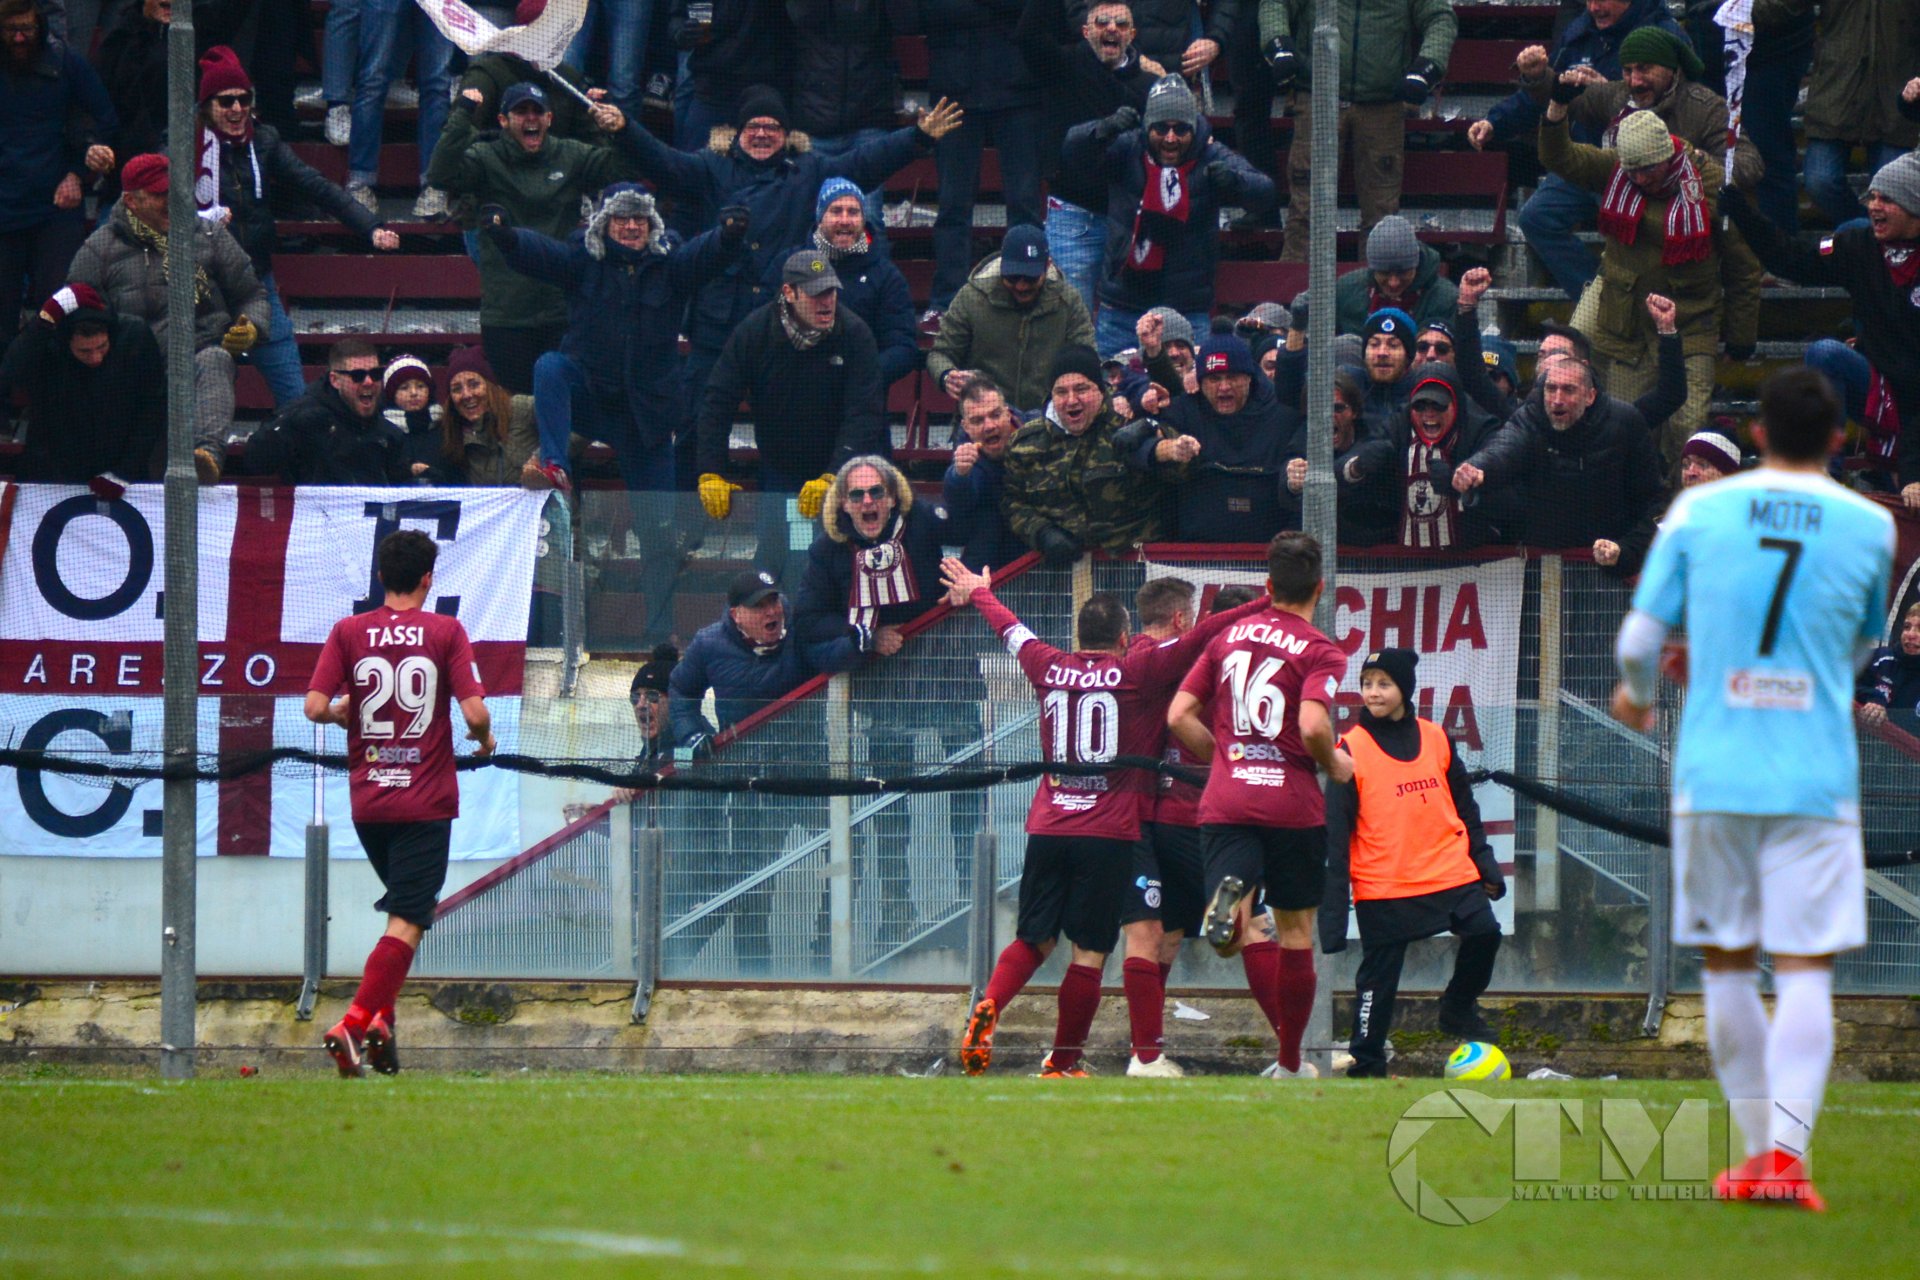 018 Arezzo Entella - gol 018A